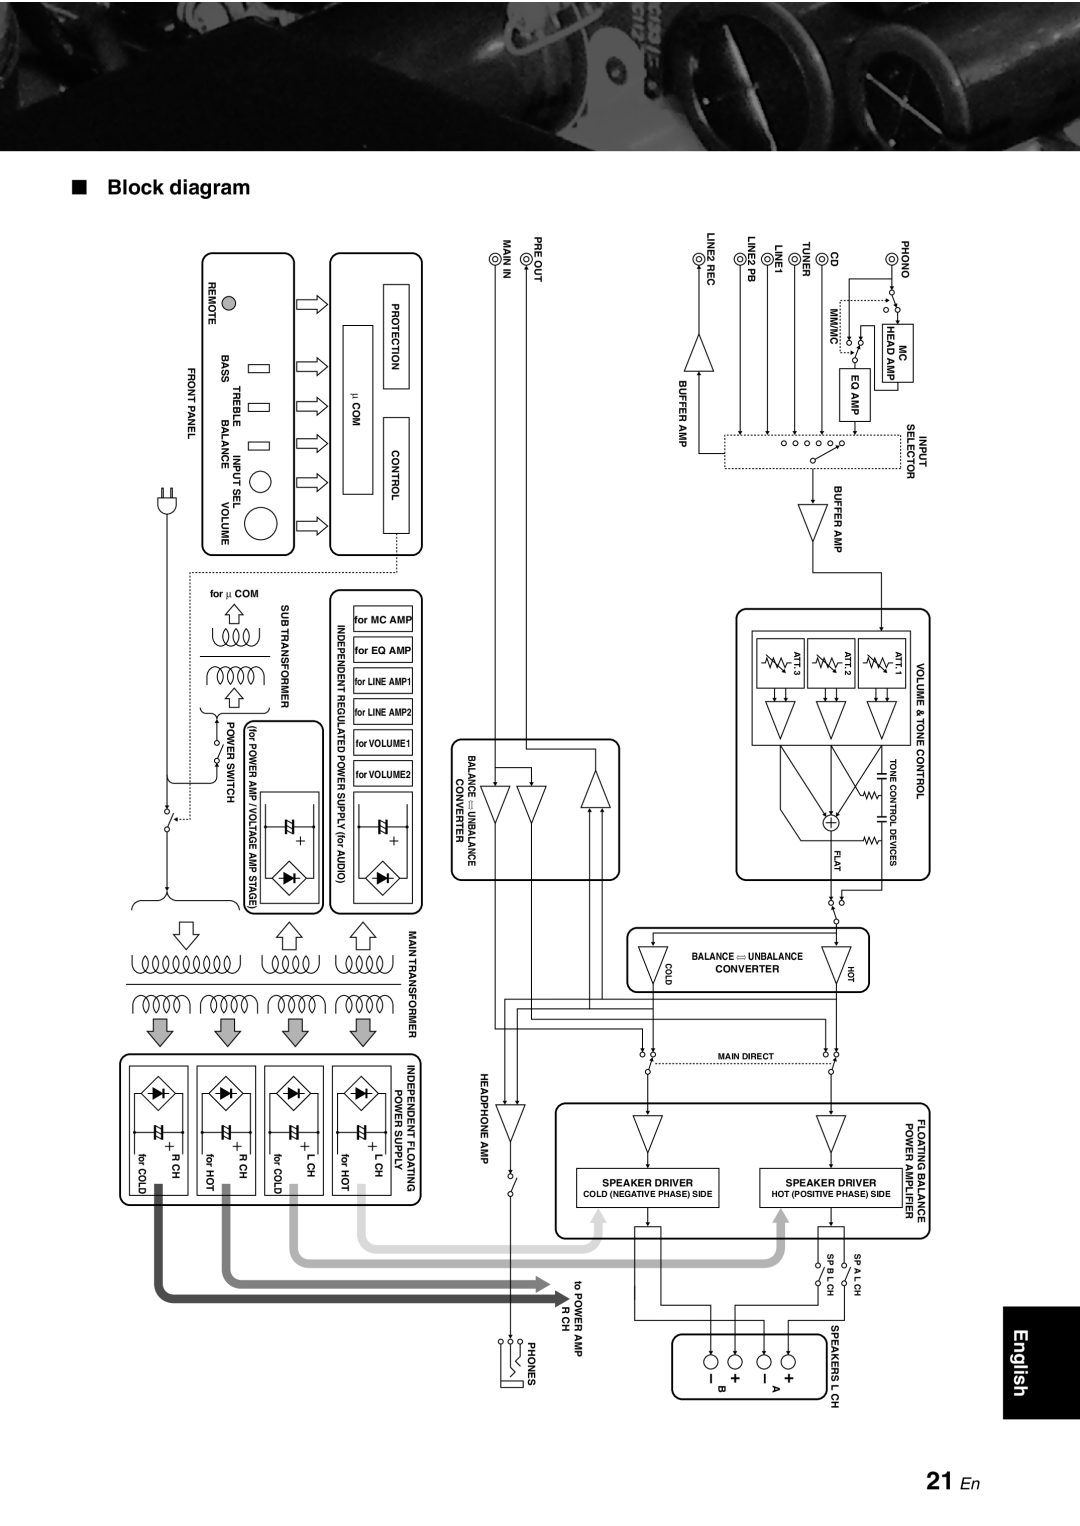 Yamaha A-S1000 owner manual 21 En, Block diagram, English, + – B 